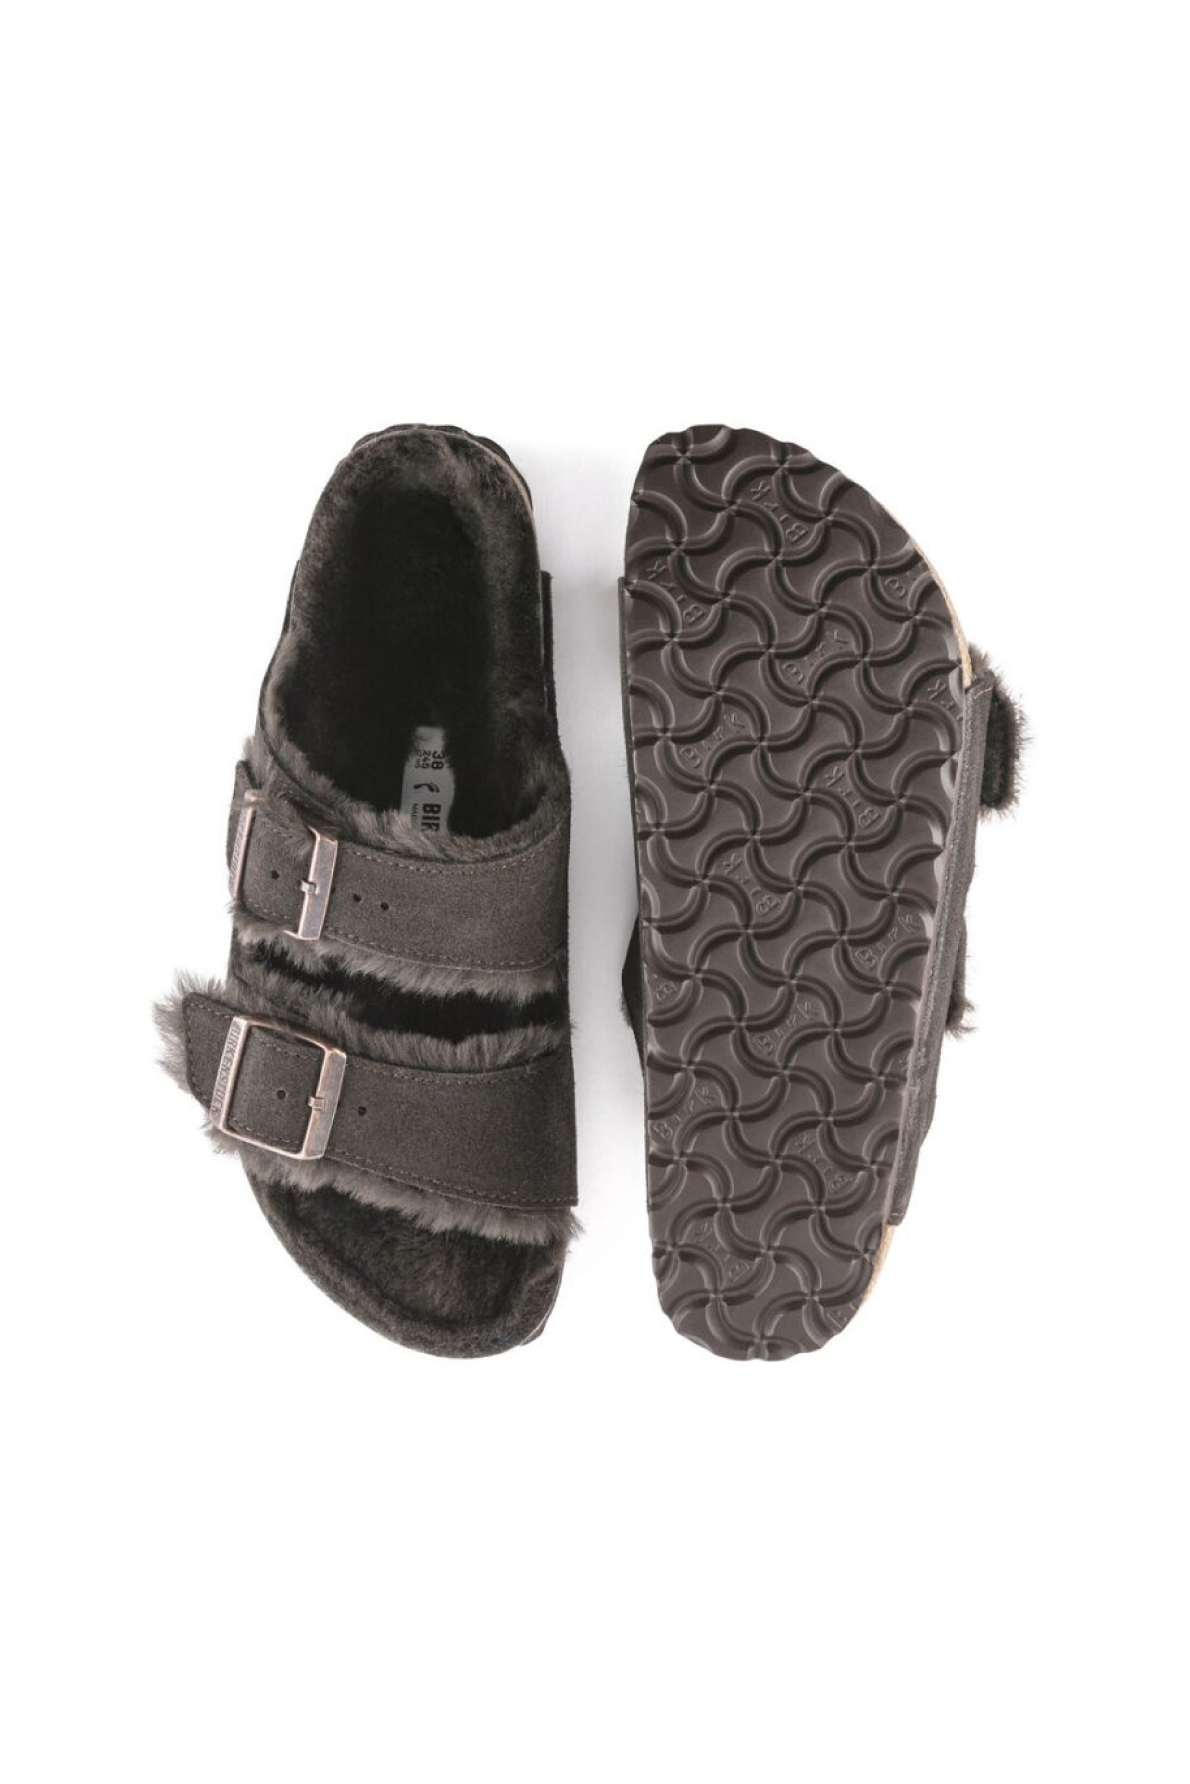 Birkenstock Women's Arizona Shearling Suede Leather Sandals Mocha - Top View